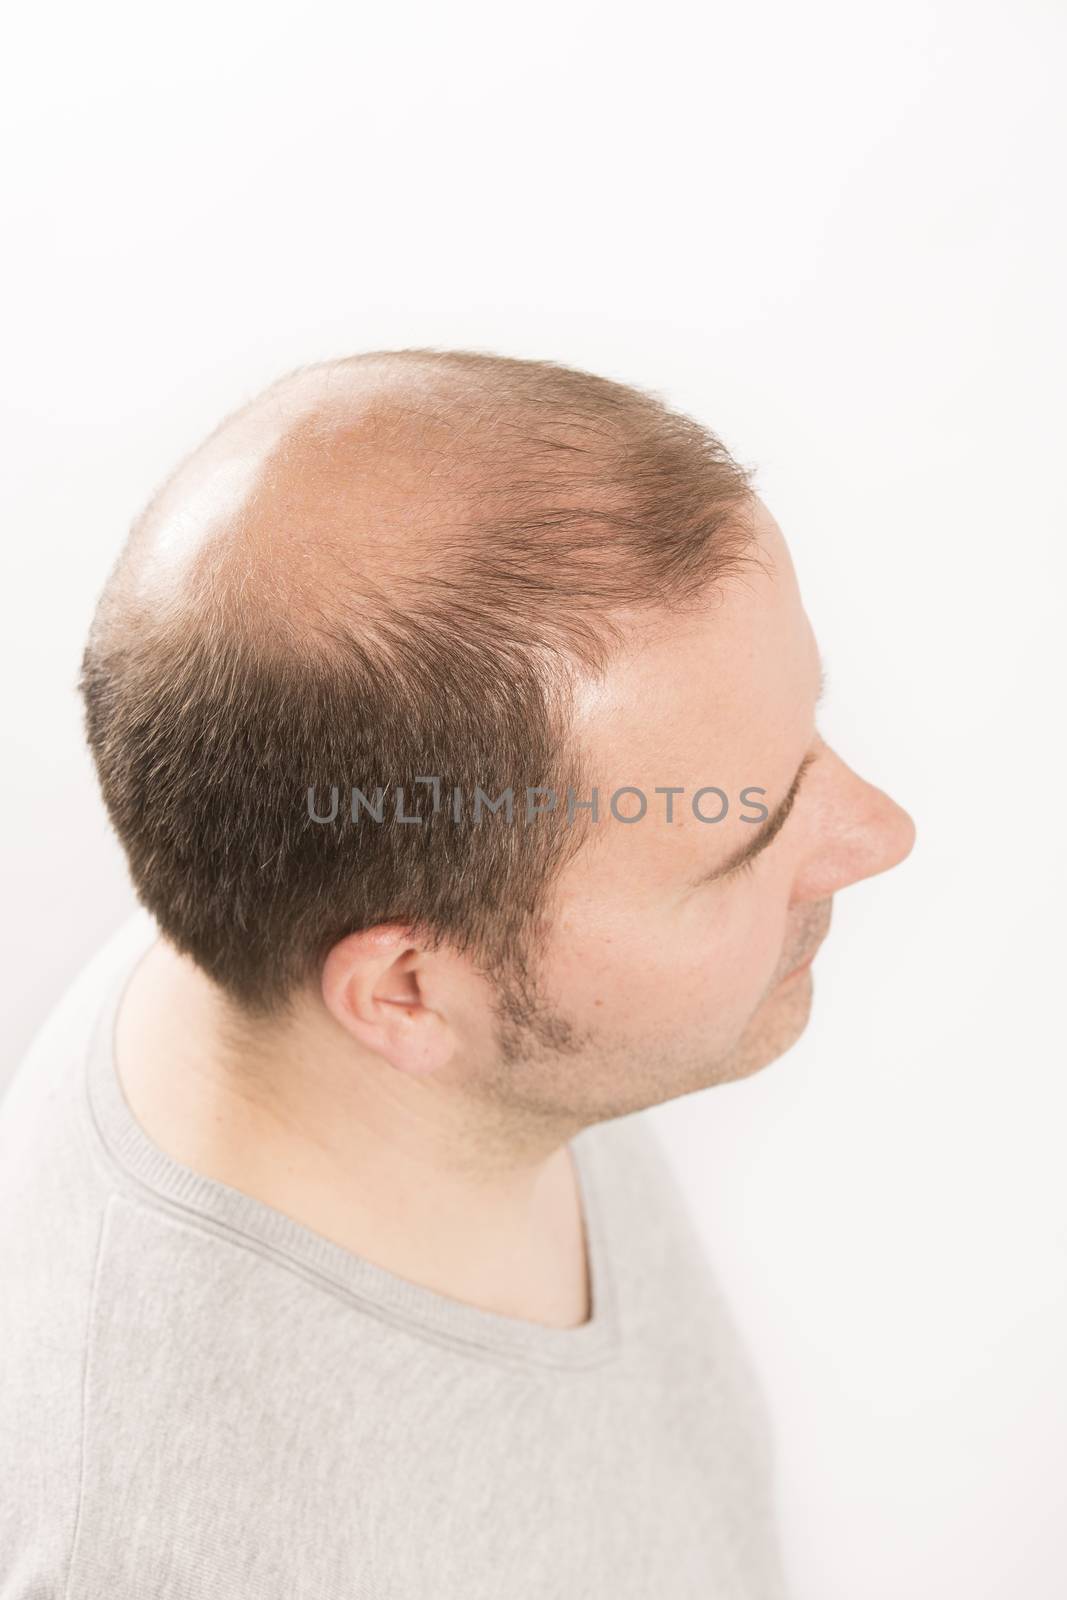 Baldness Alopecia man hair loss haircare  by CatherineL-Prod